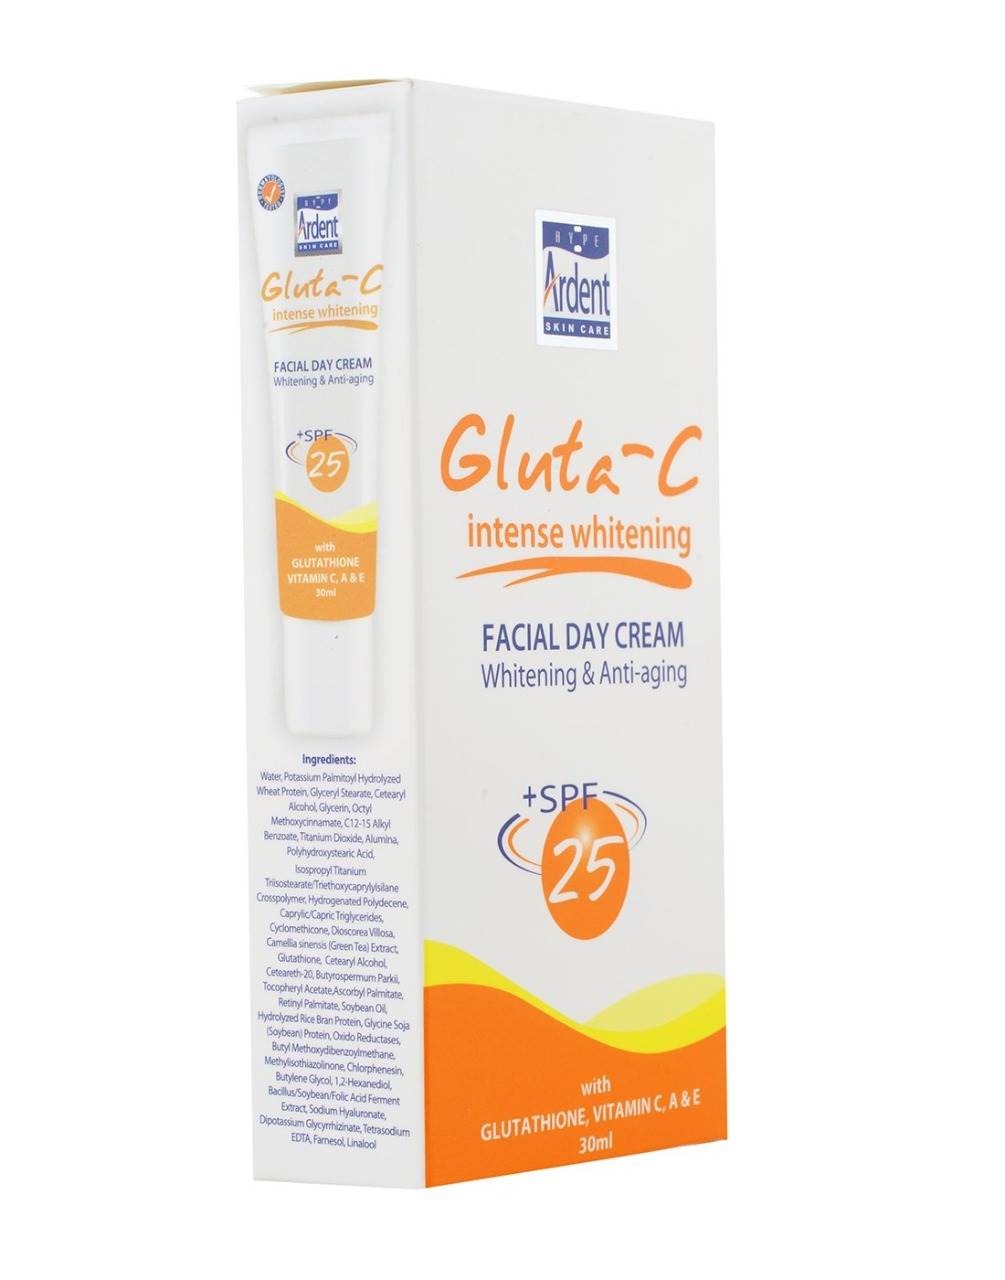 Gluta C Intense Whitening Facial Day Cream whitening With Anti Aging SPF 25 reviews